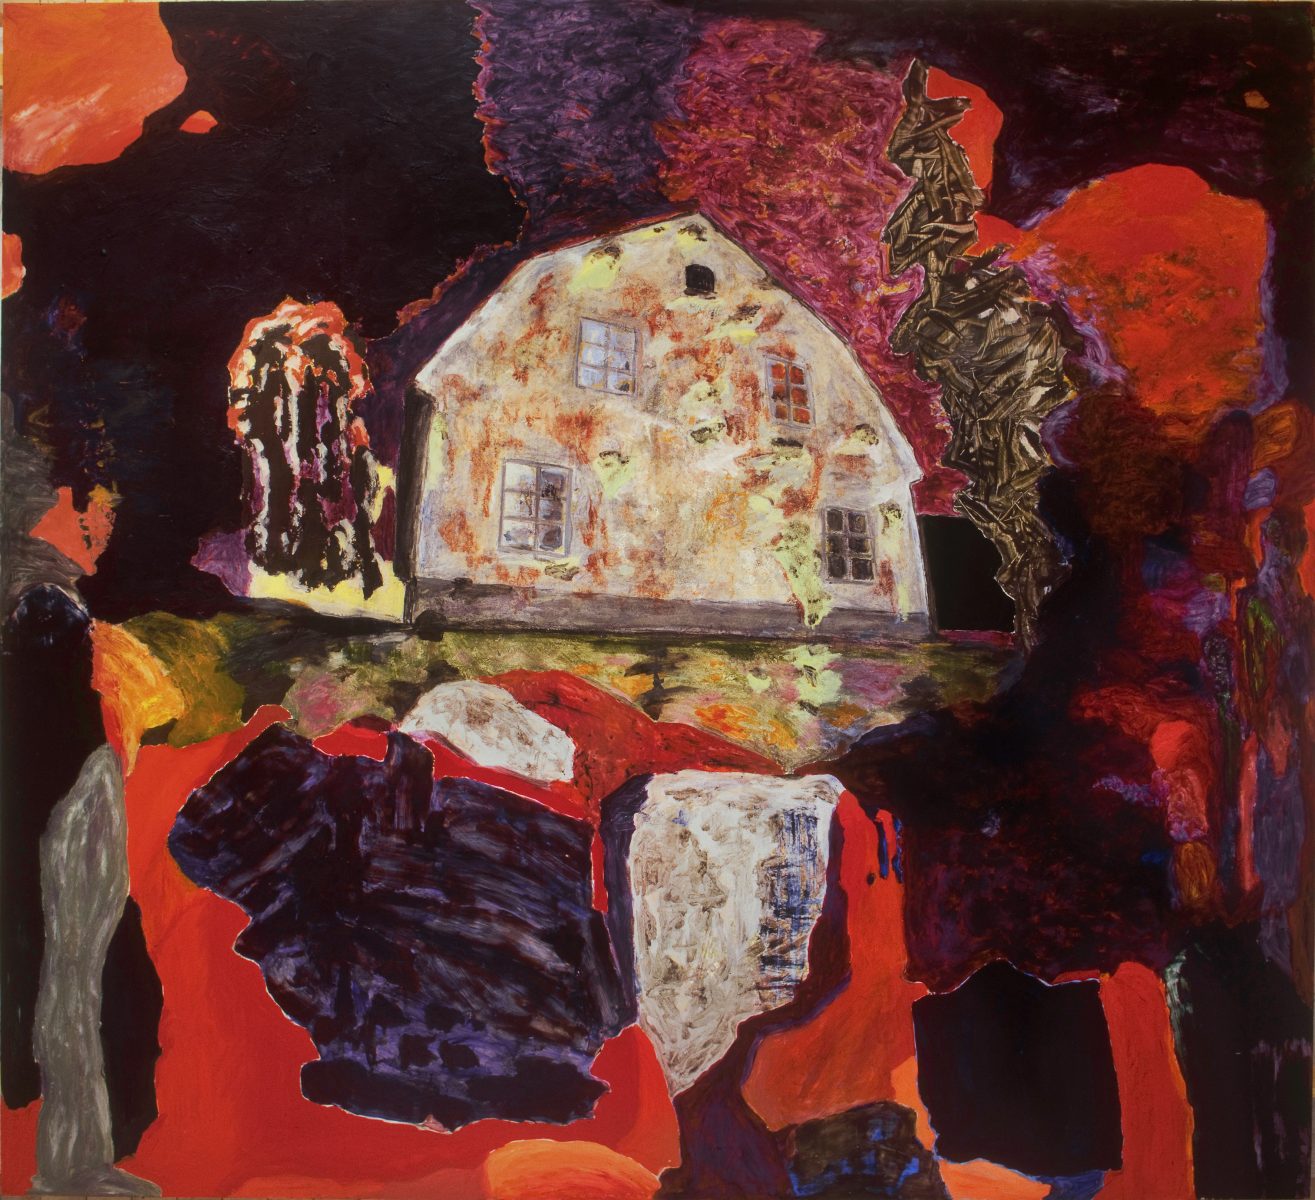 Press image of Rolf Hanson's painting Runt om hus II, 1994